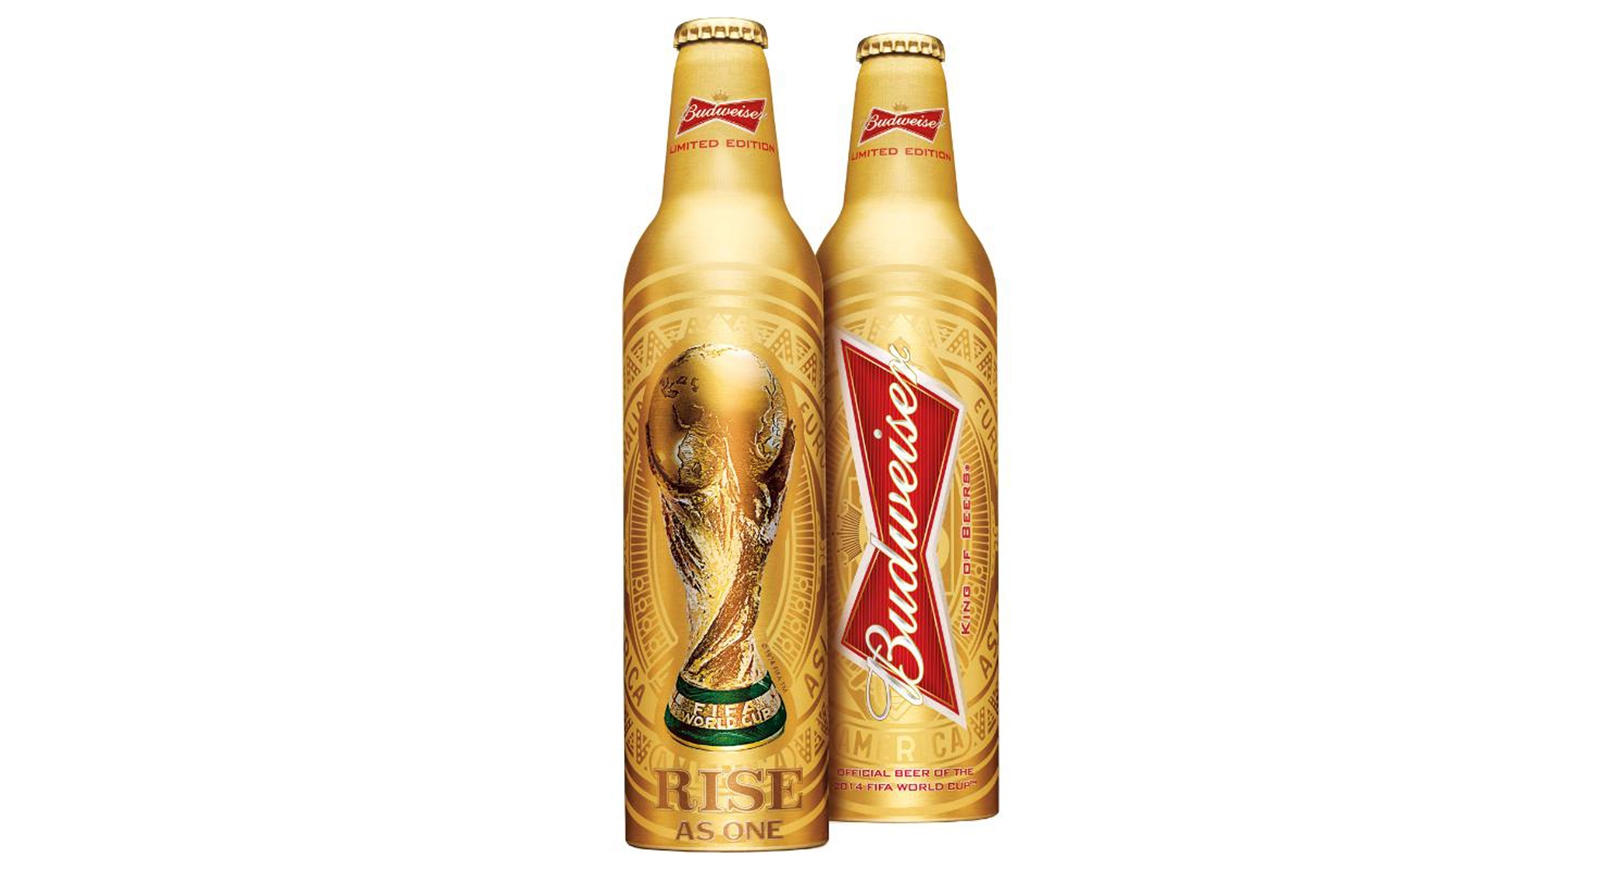 Budweiser unveils limited-edition trophy bottle